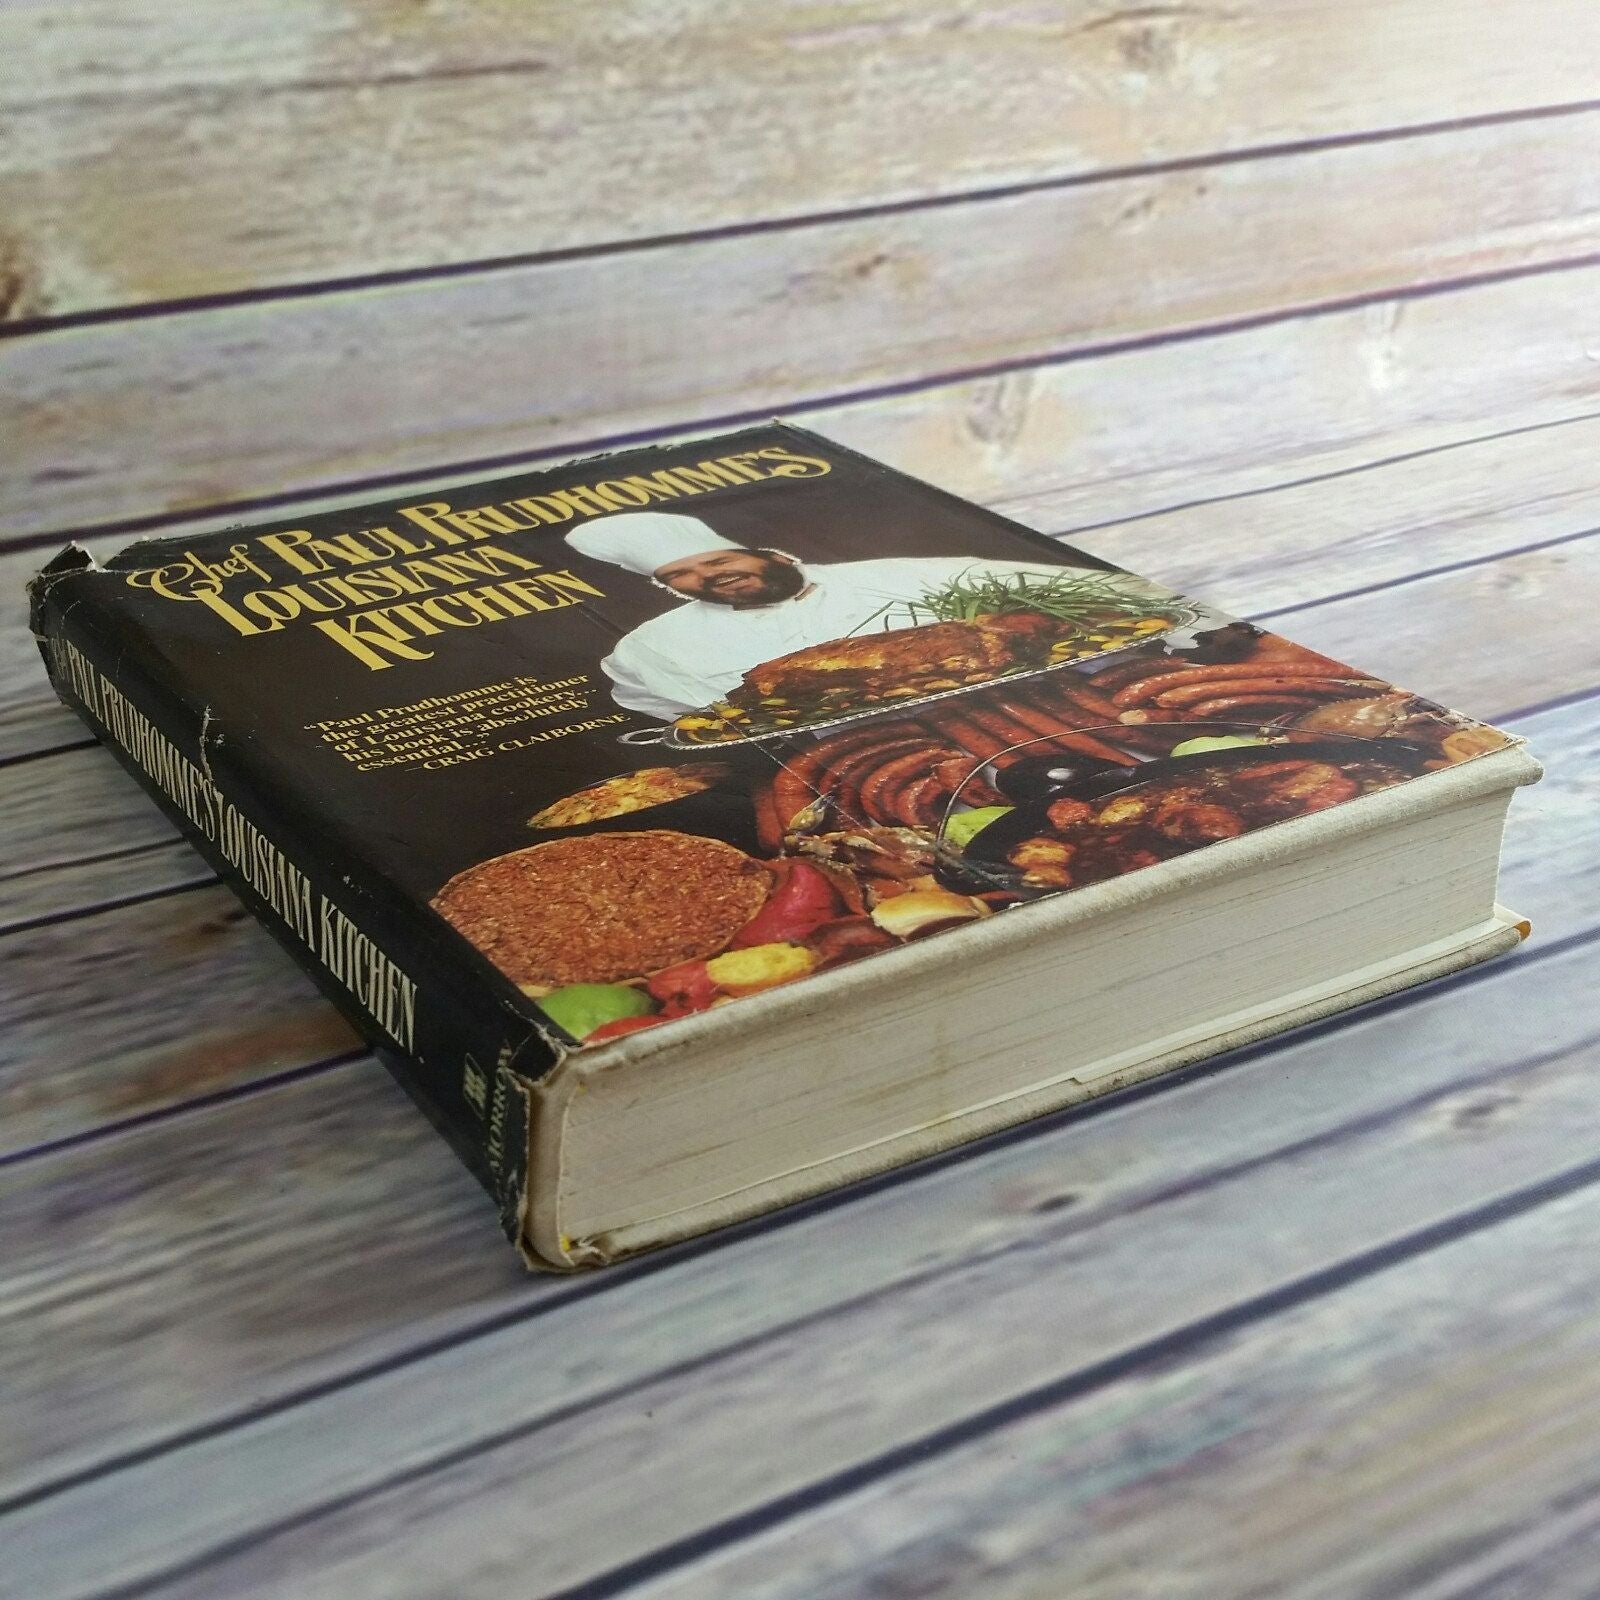 Hardback Recipe Books Prudhomme Family Cookbook Old-time 